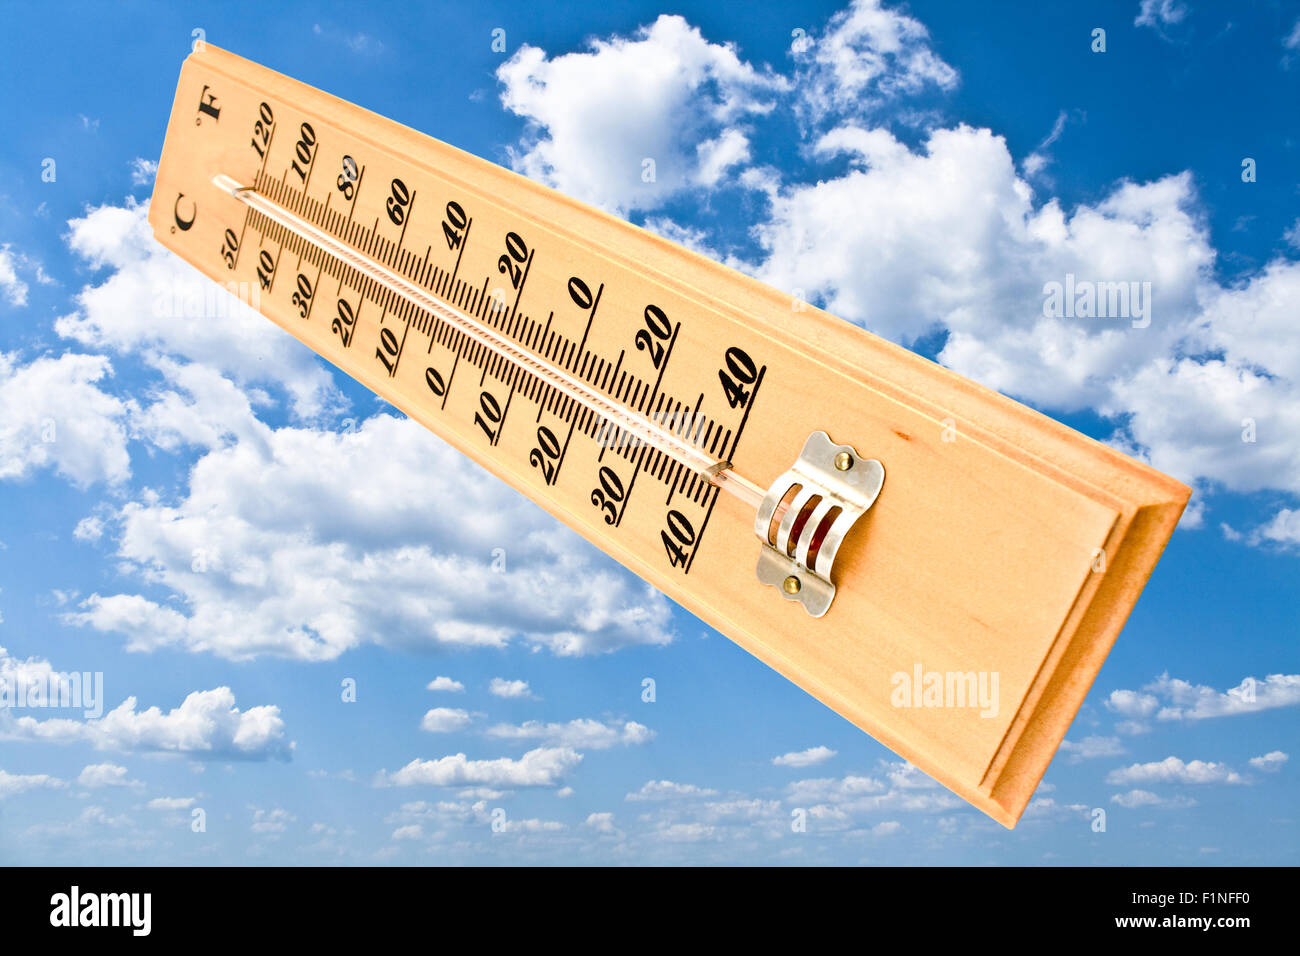 Termómetro celsius fahrenheit de madera sobre el cielo azul Foto de stock